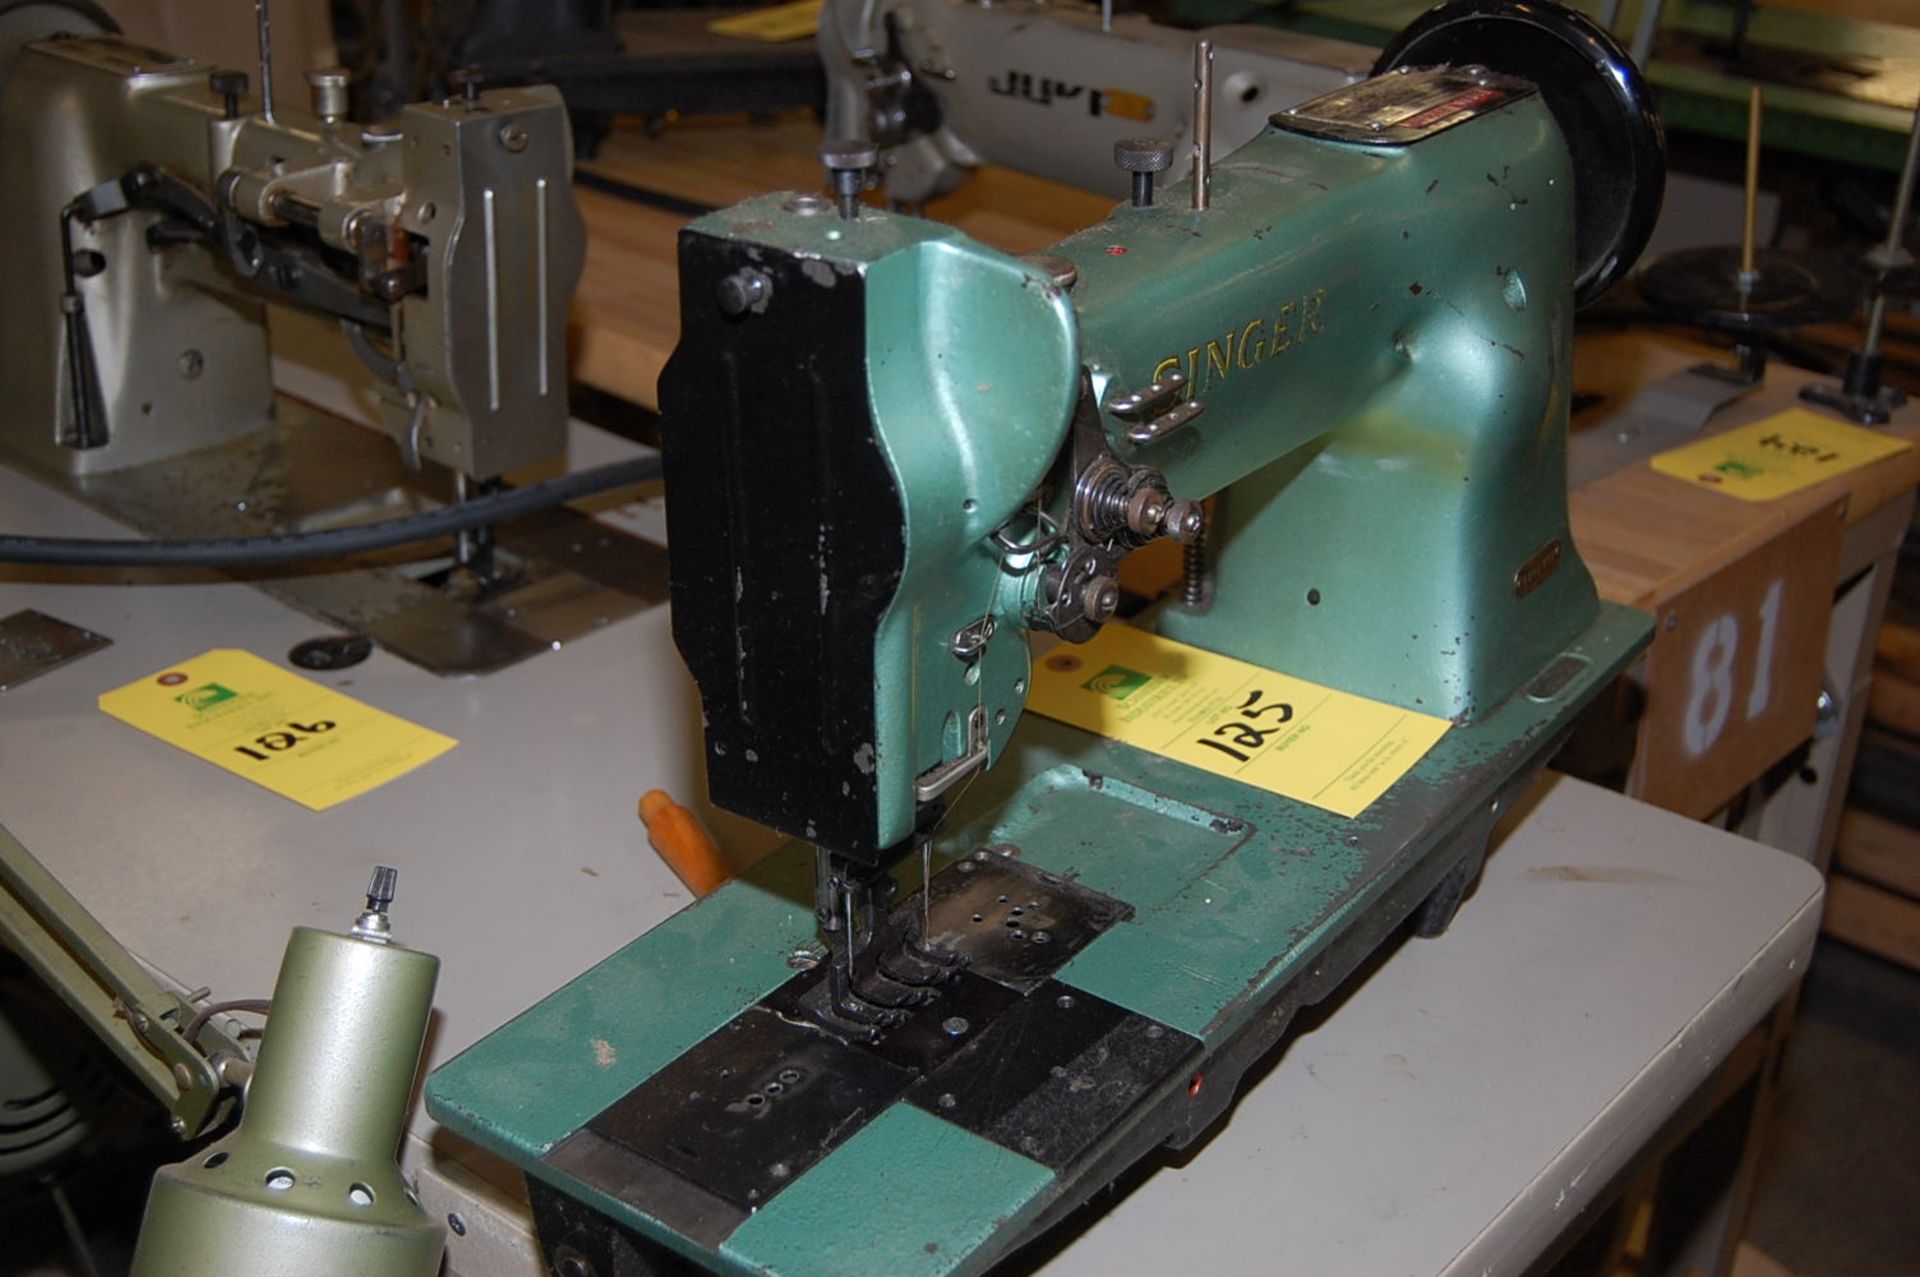 Singer Model #112W139 Sewing Machine, Serial #W873601 - Image 2 of 2